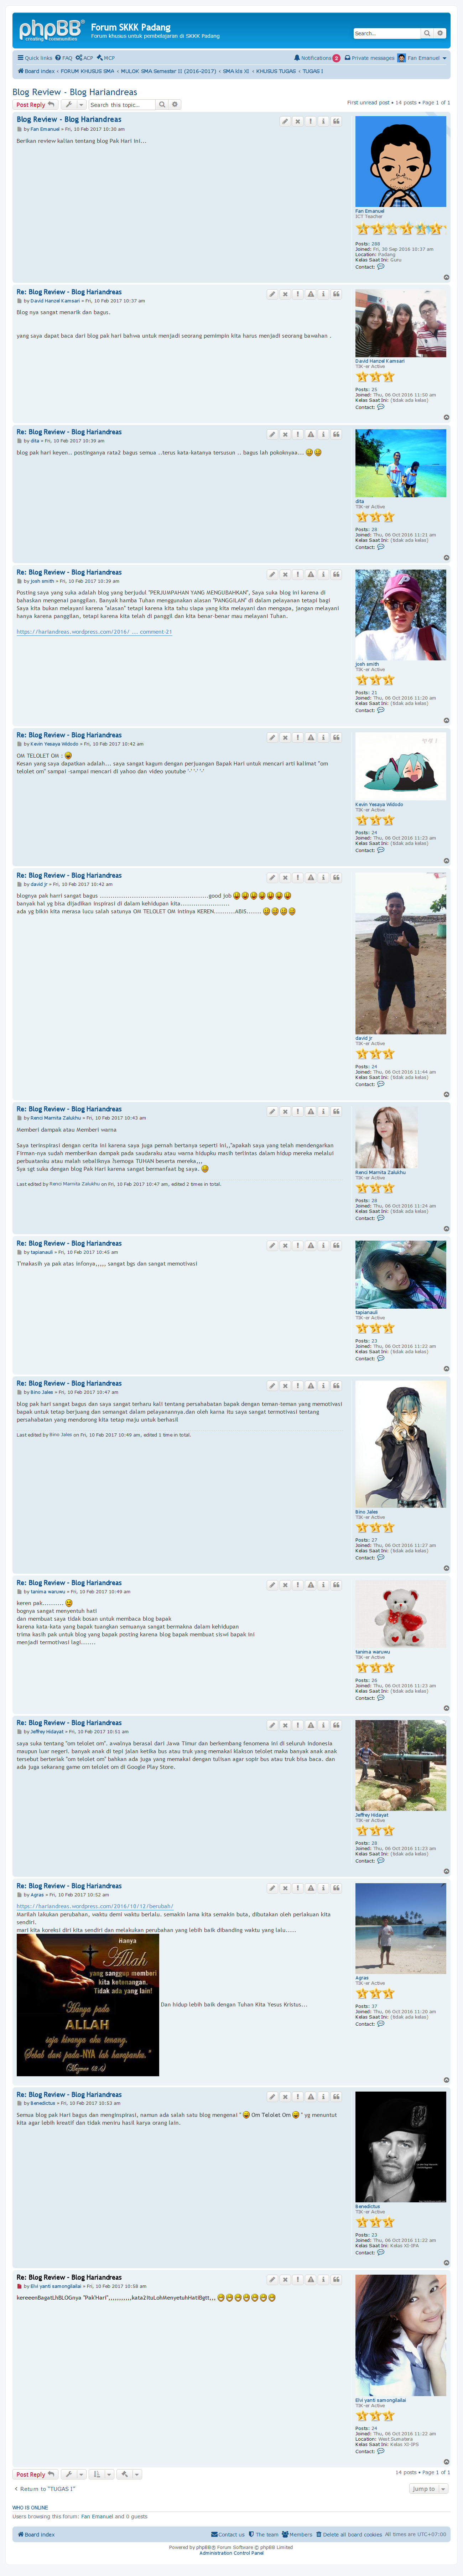 blog-review-blog-hariandreas-forum-skkk-padang